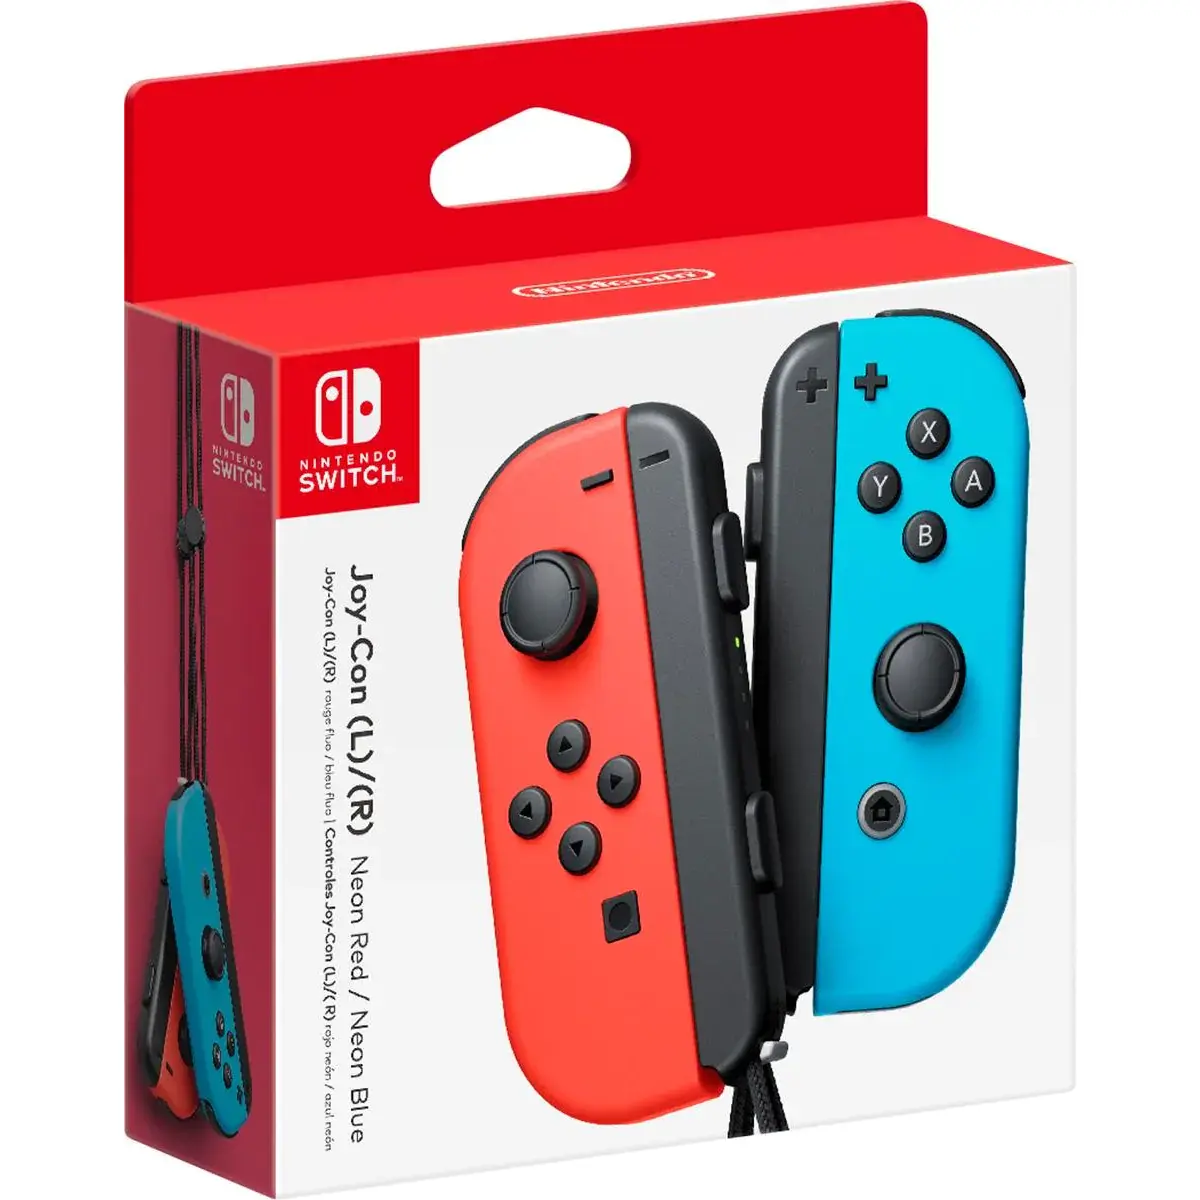  Nintendo Joy-Con (L) - Neon Blue - Nintendo Switch